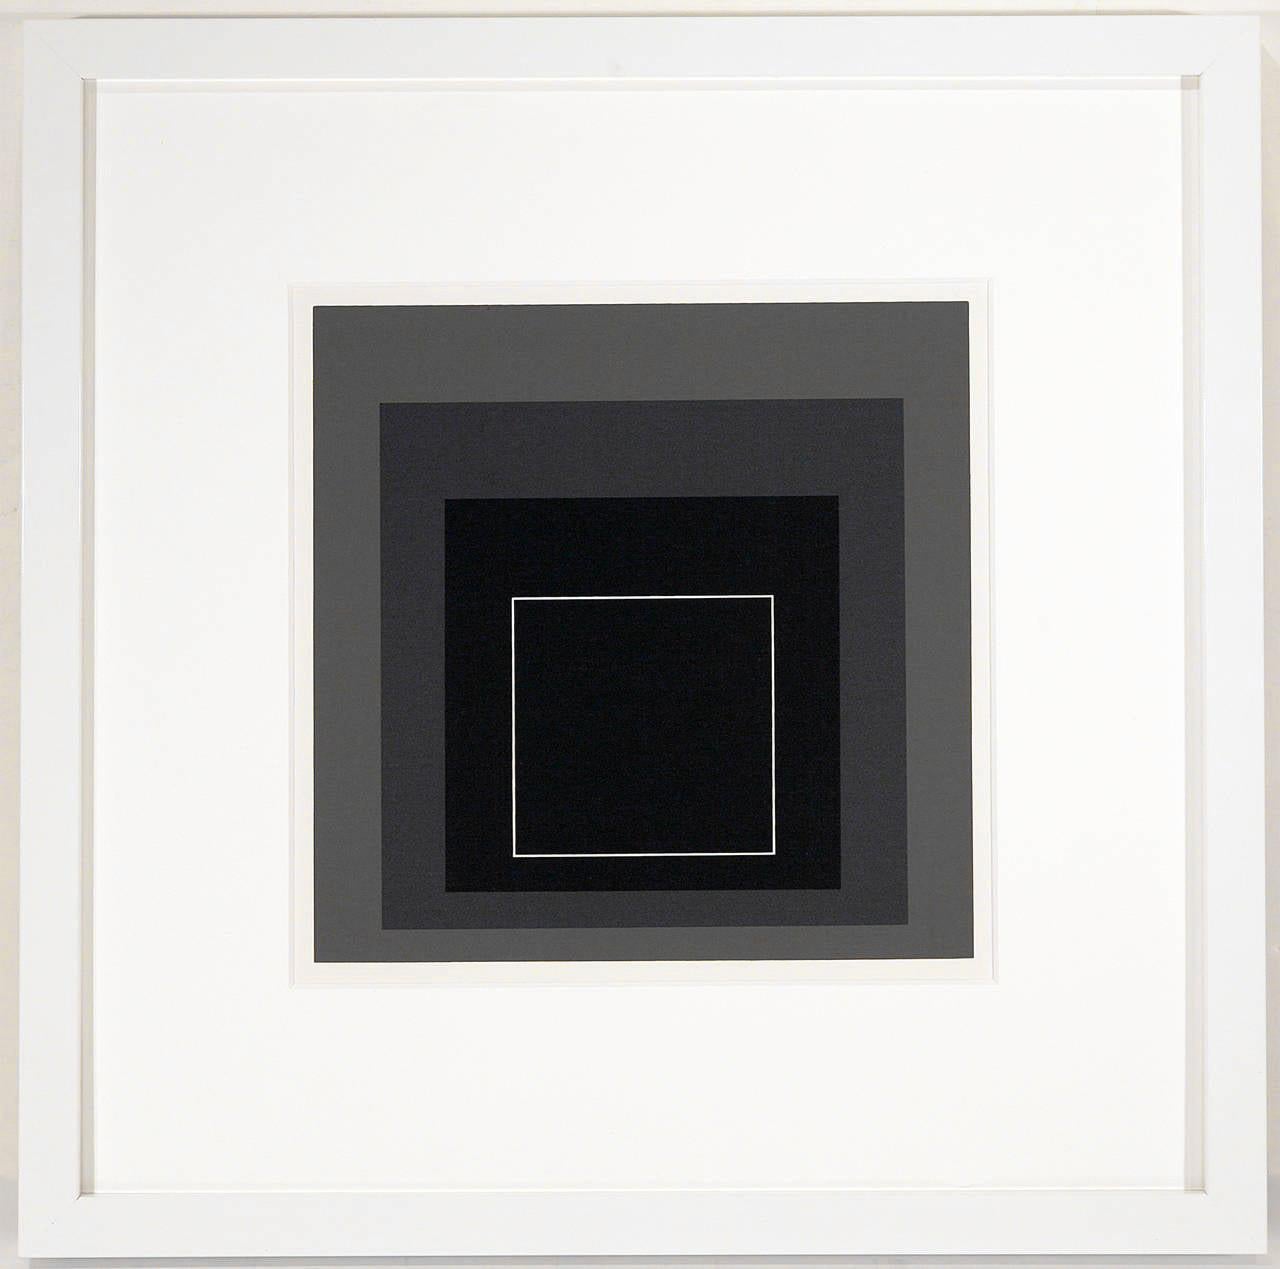 Josef Albers, “White Line Squares”